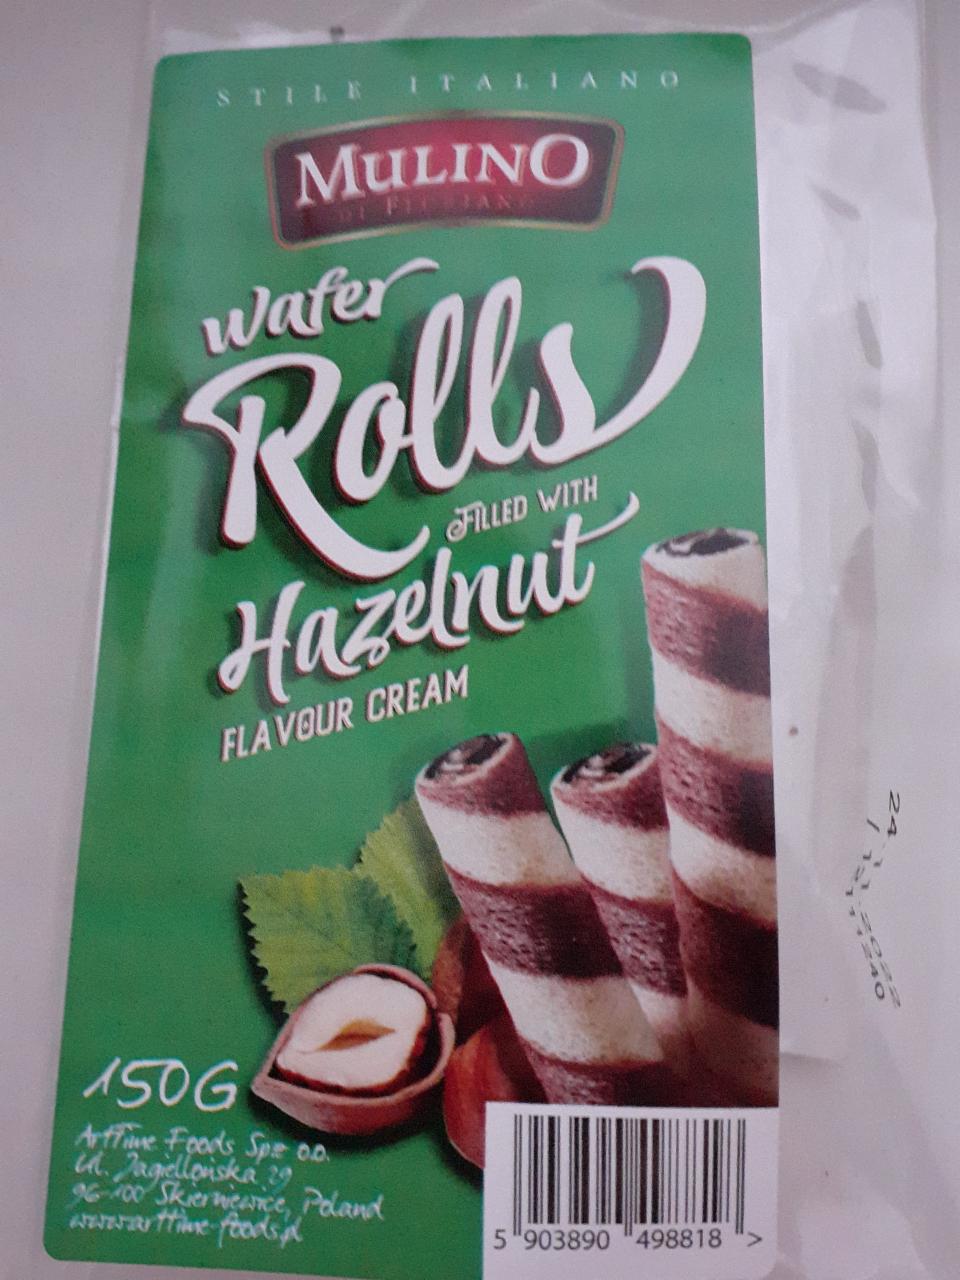 Fotografie - Wafer Rolls filled with Hazelnut Mulino